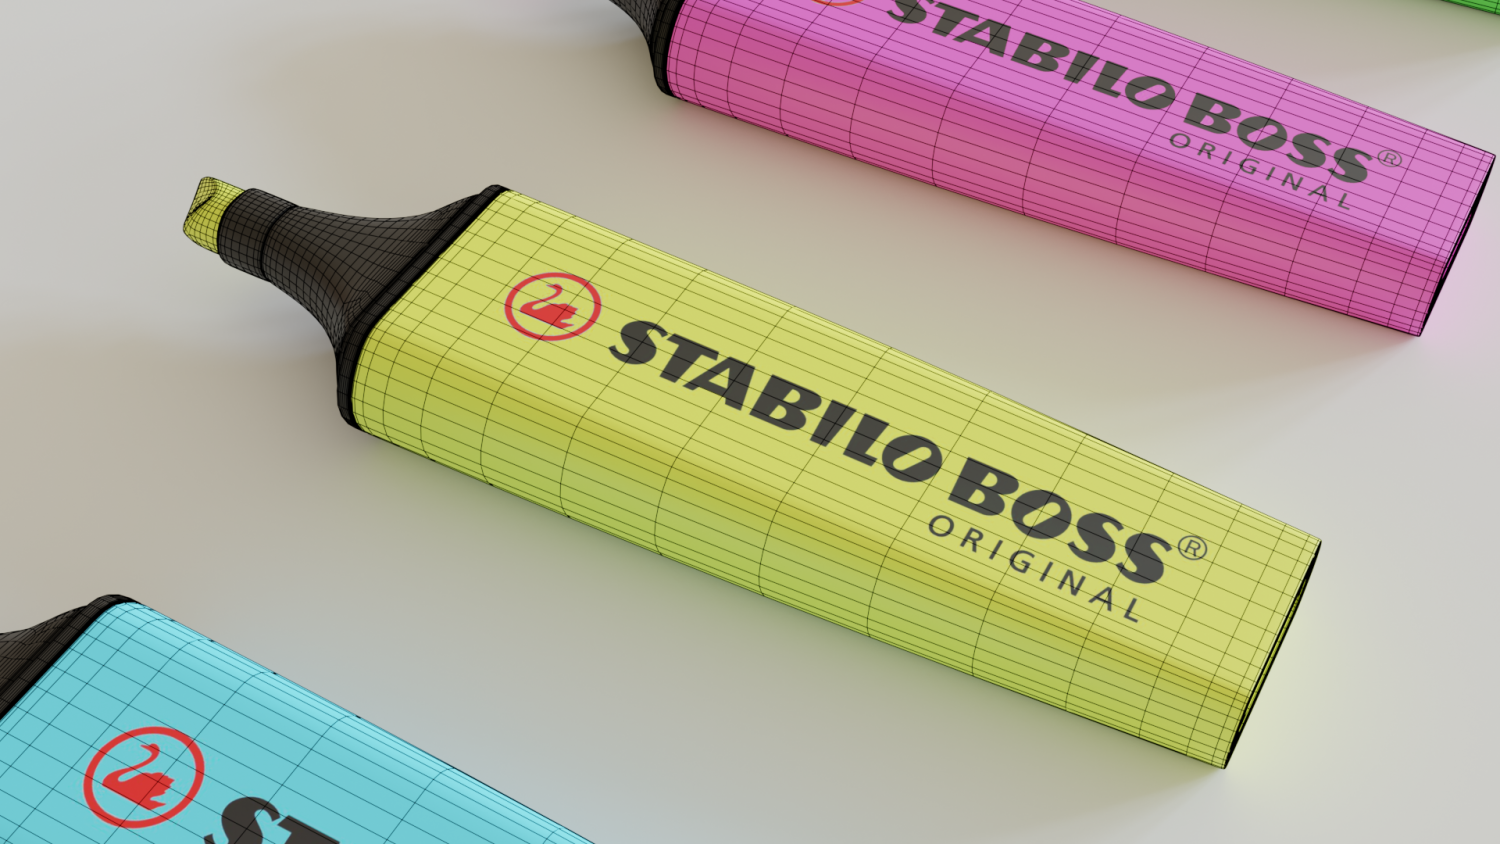 Stabilo Boss Original Highlighter 3D model